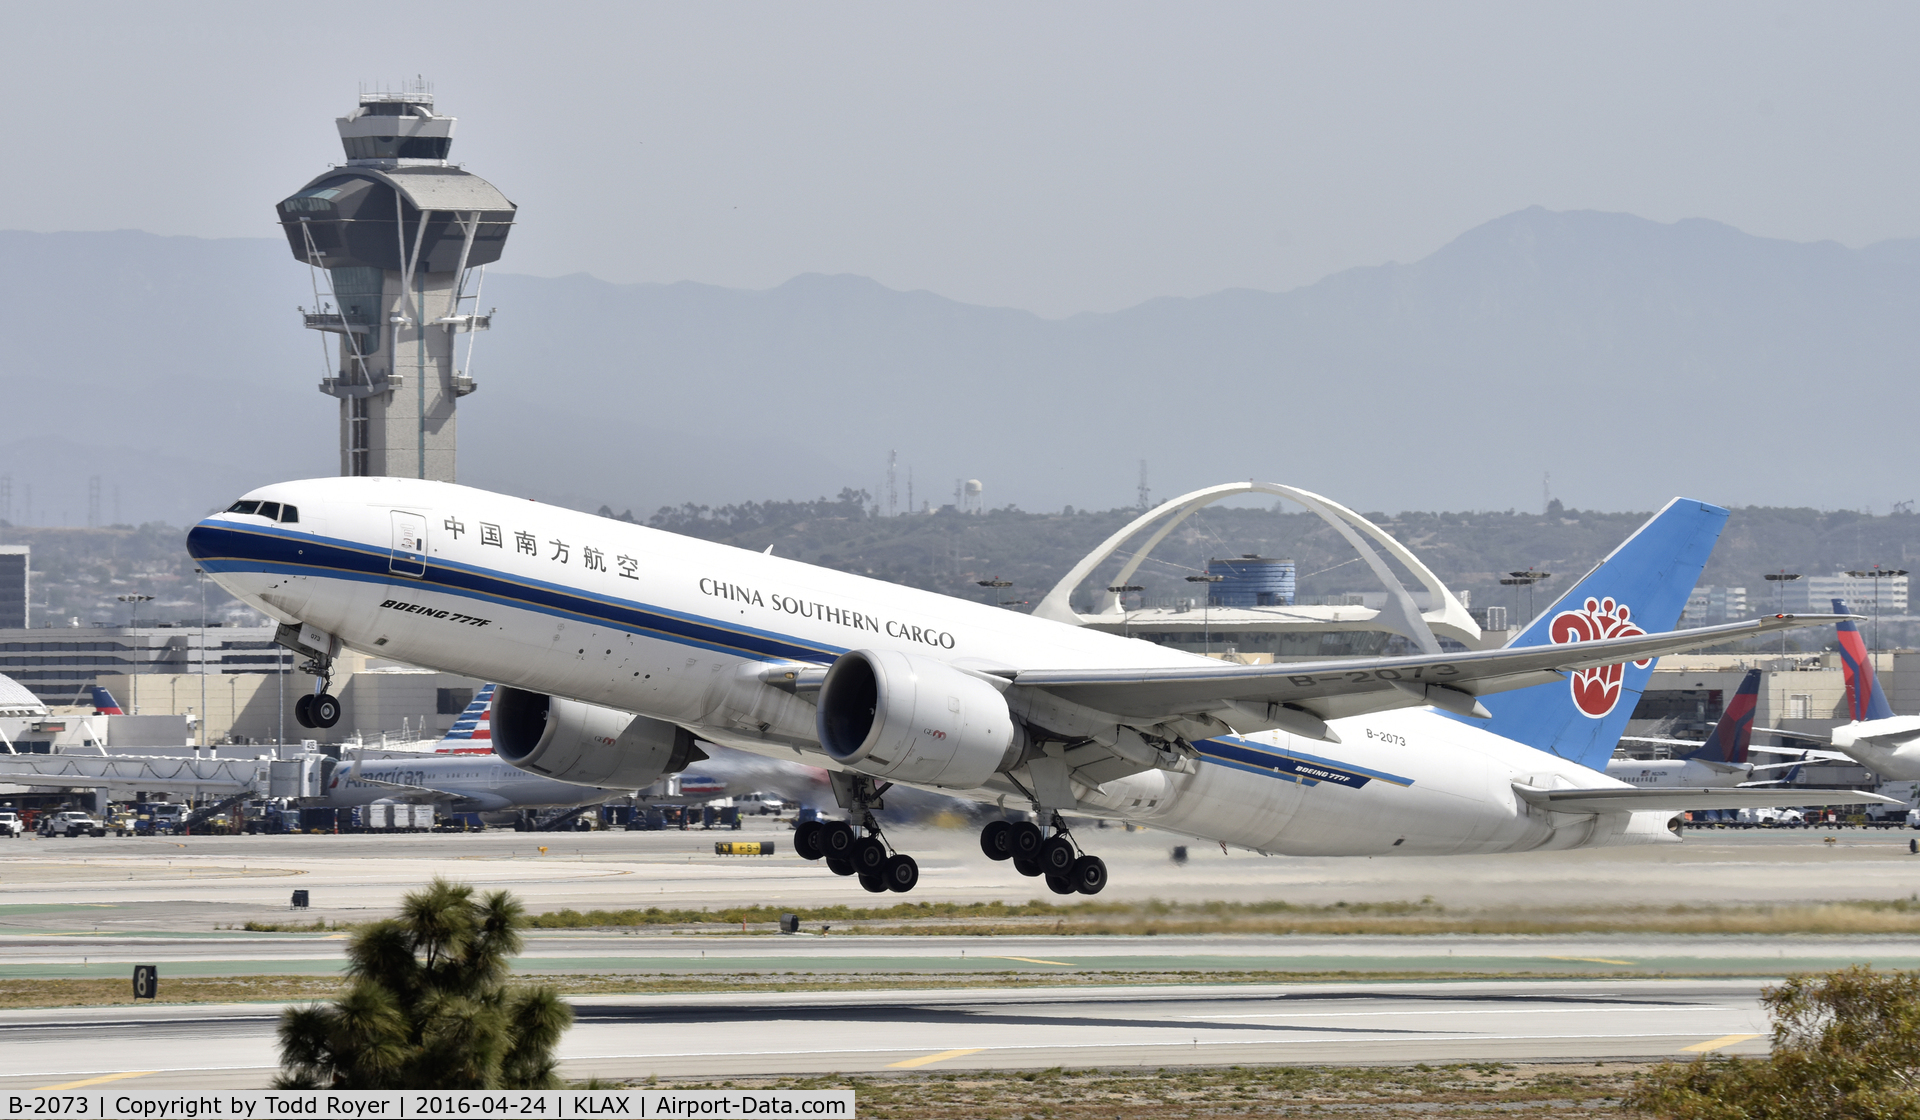 B-2073, 2009 Boeing 777-F1B C/N 37311, Departing LAX on 25L